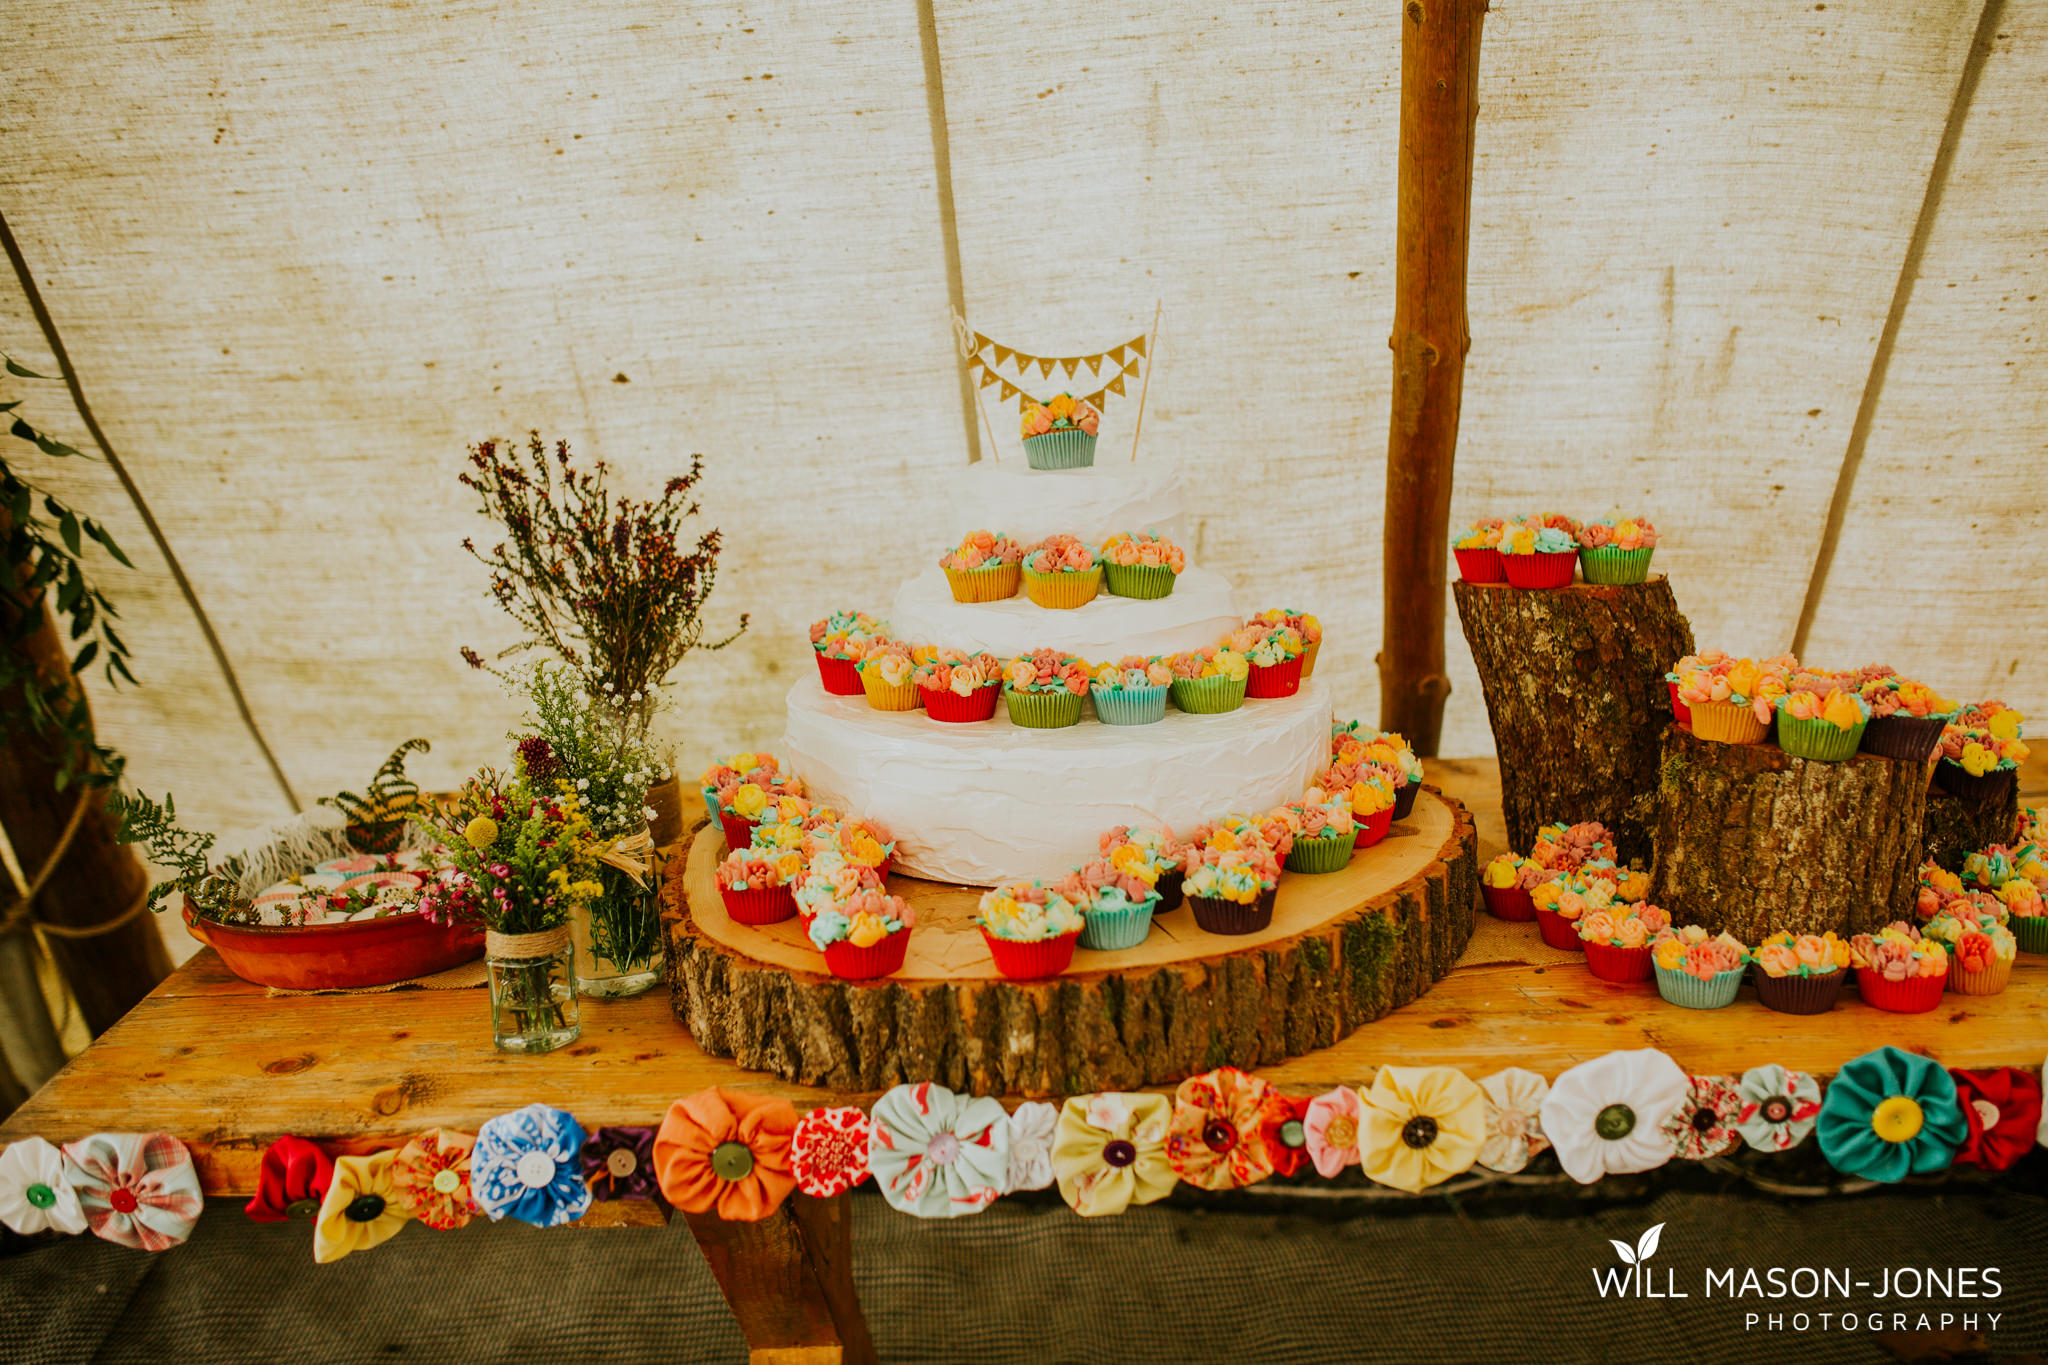  pen-y-banc-farm-tipi-wedding-decoration-photography 